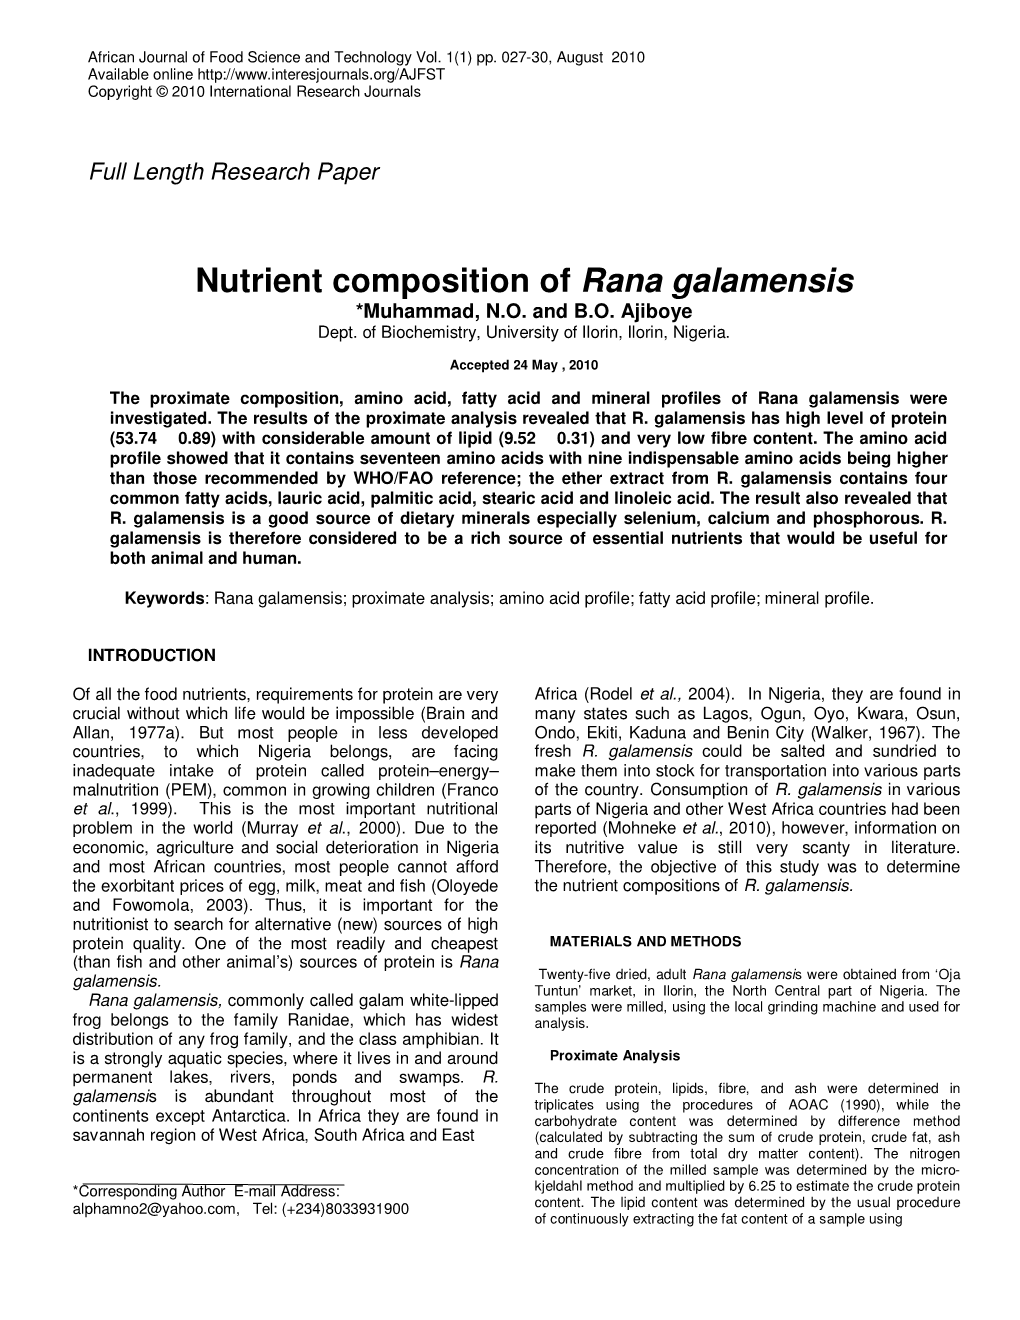 Nutrient Composition of Rana Galamensis *Muhammad, N.O